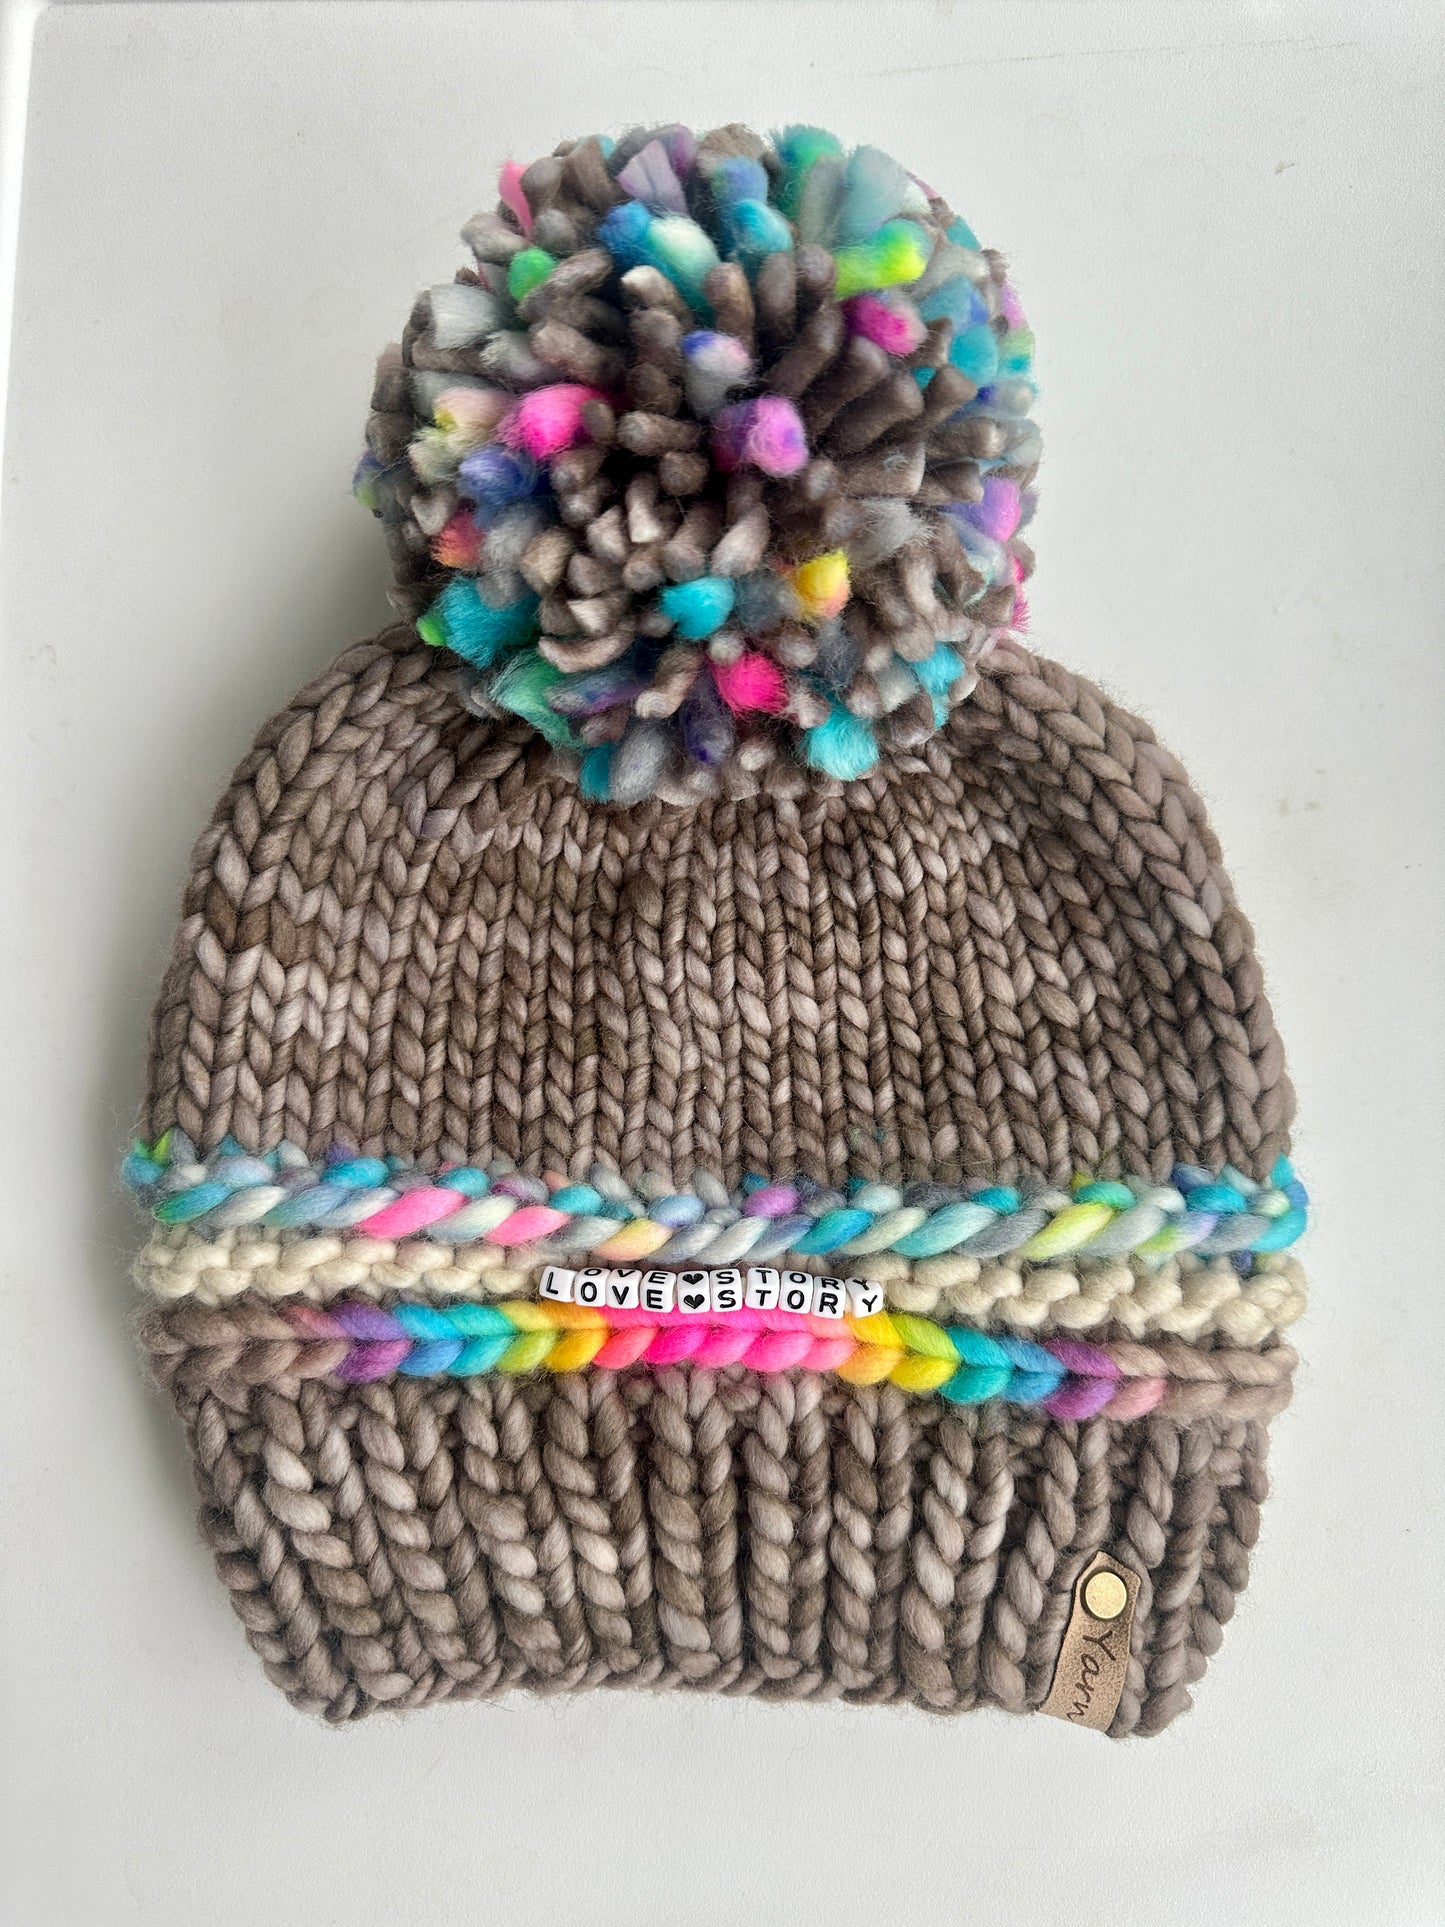 Friendship bracelet merino wool knit hat with merino wool pom